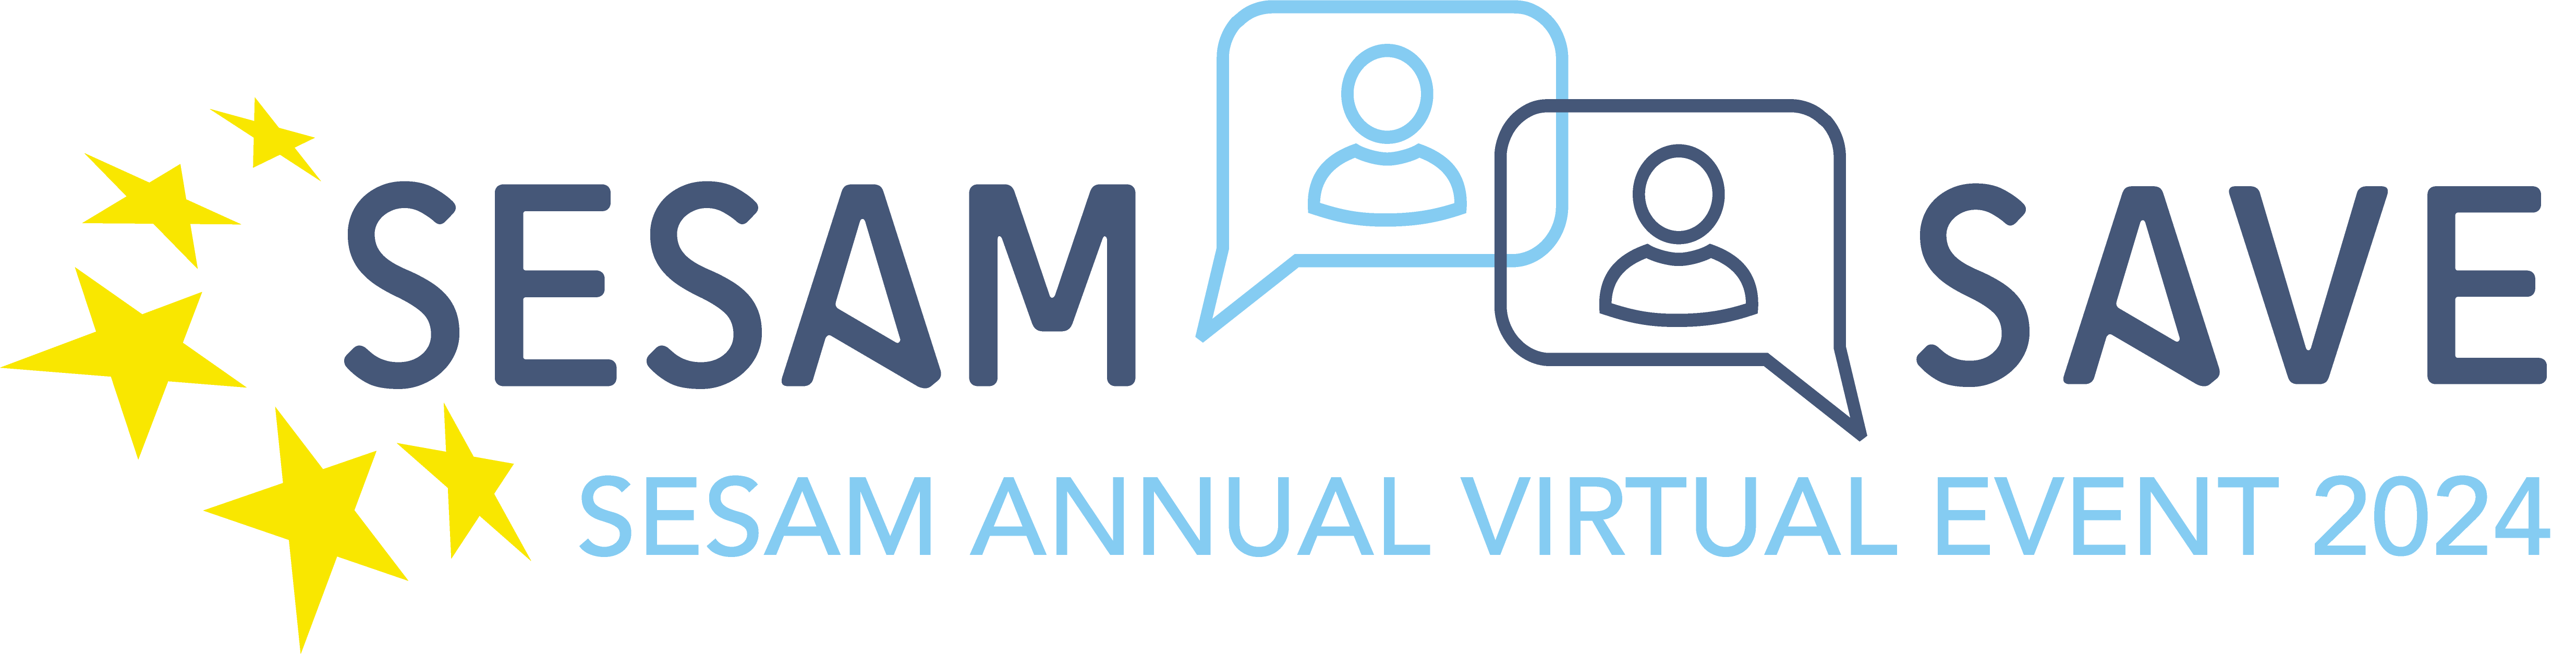 SESAM Virtual Event SAVE 2024